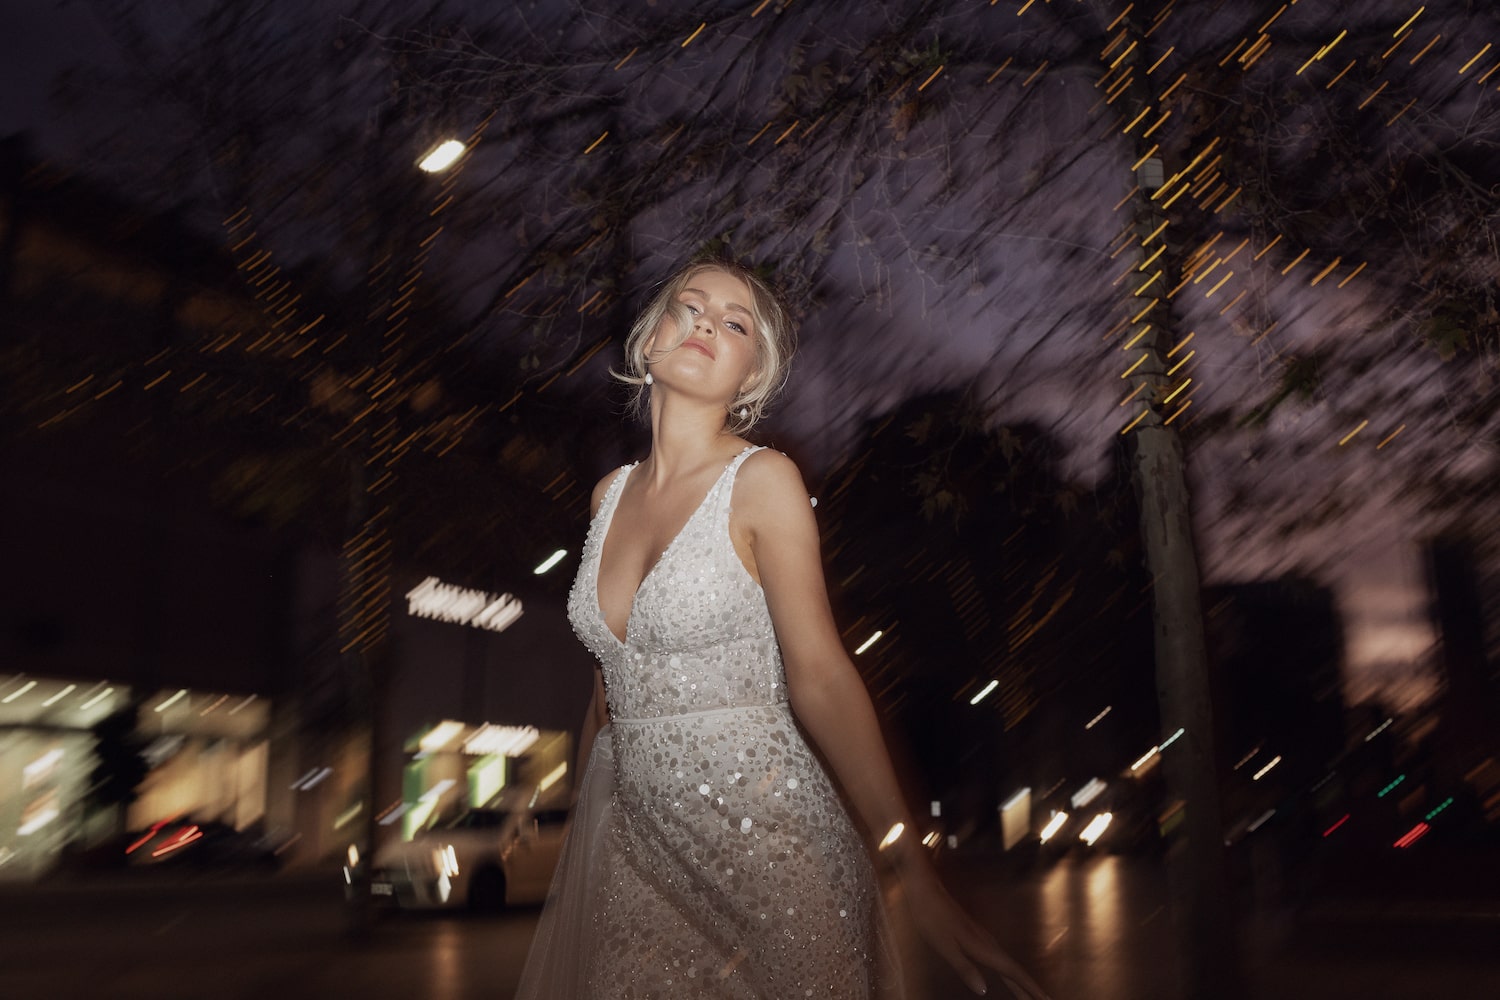 Model posing on city sidewalk at night